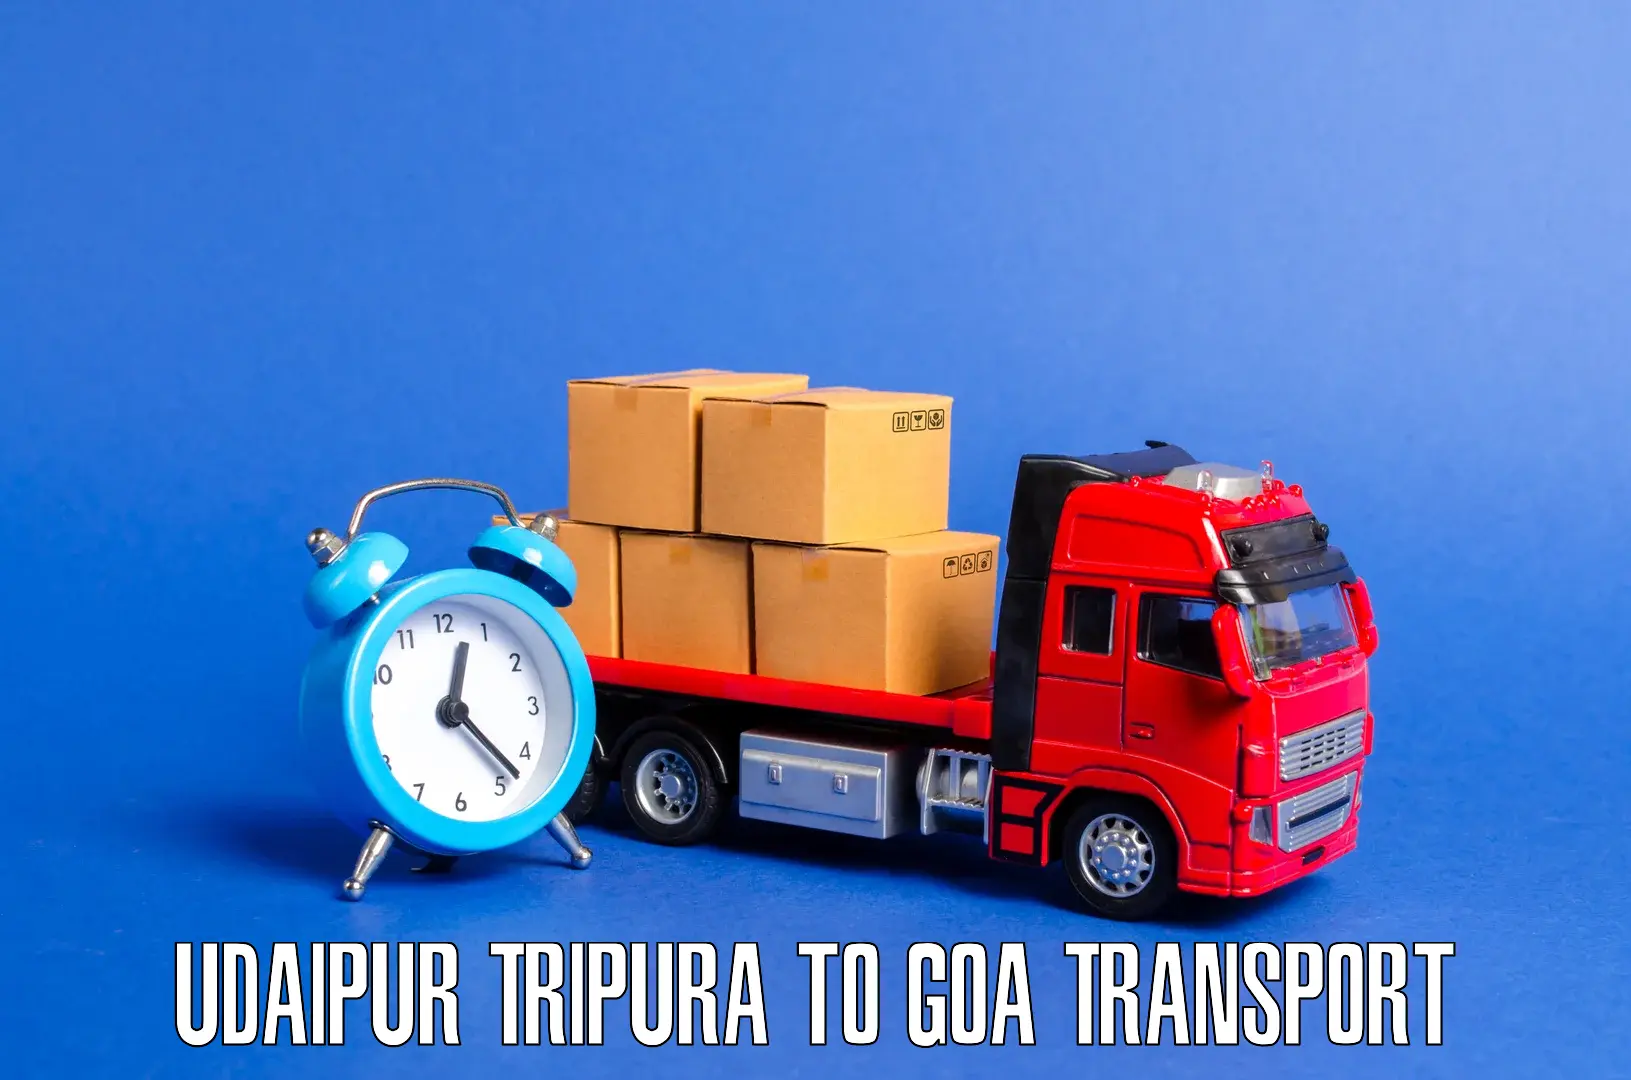 Sending bike to another city Udaipur Tripura to Goa University